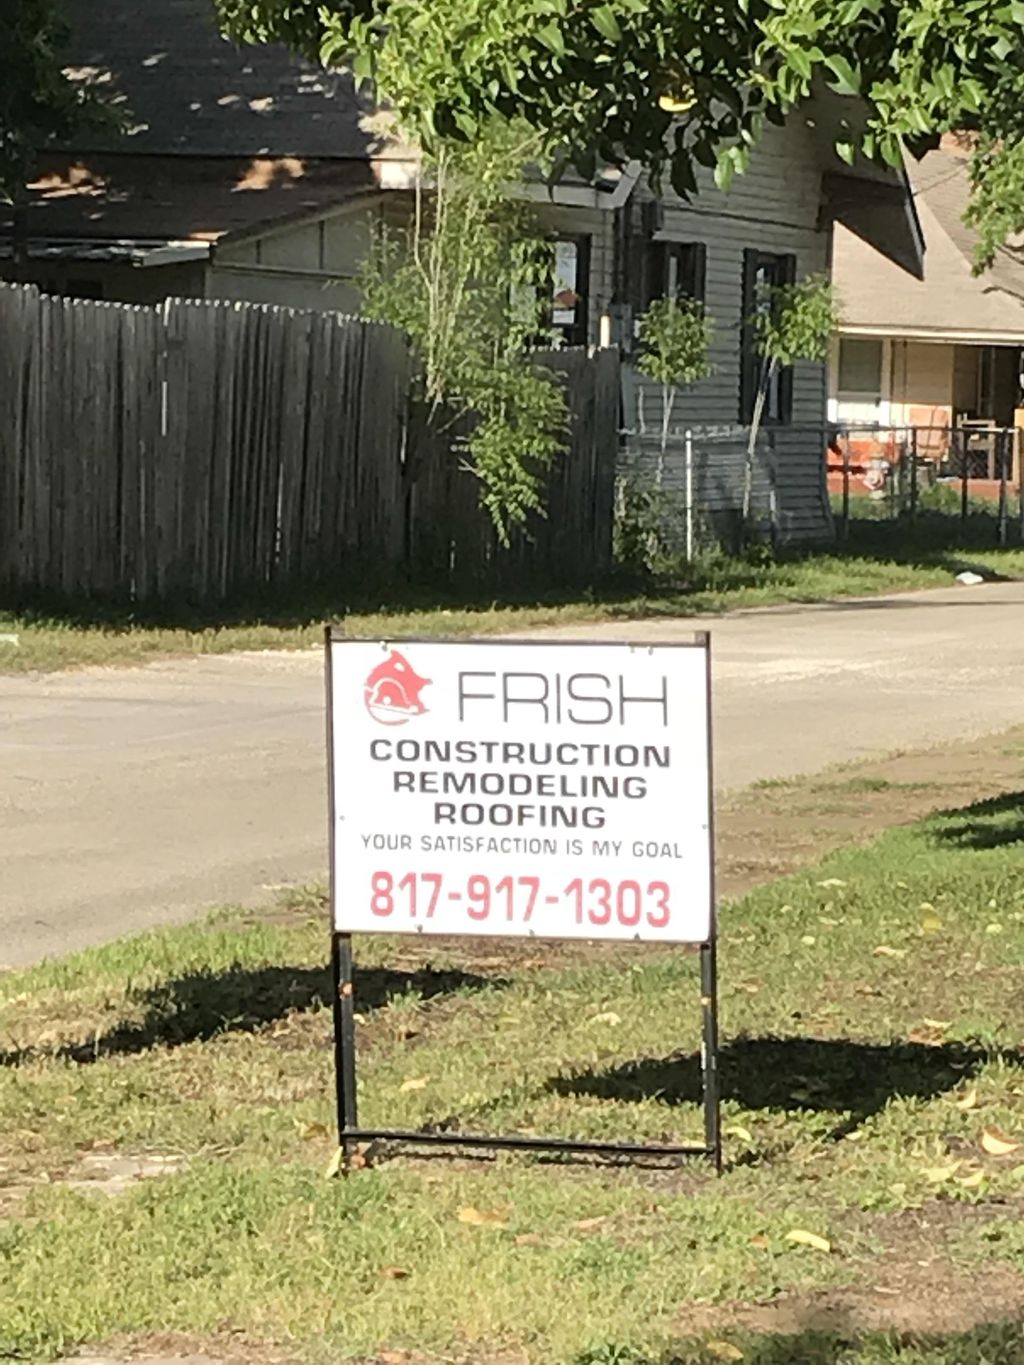 Frish Construction & Remodeling, LLC